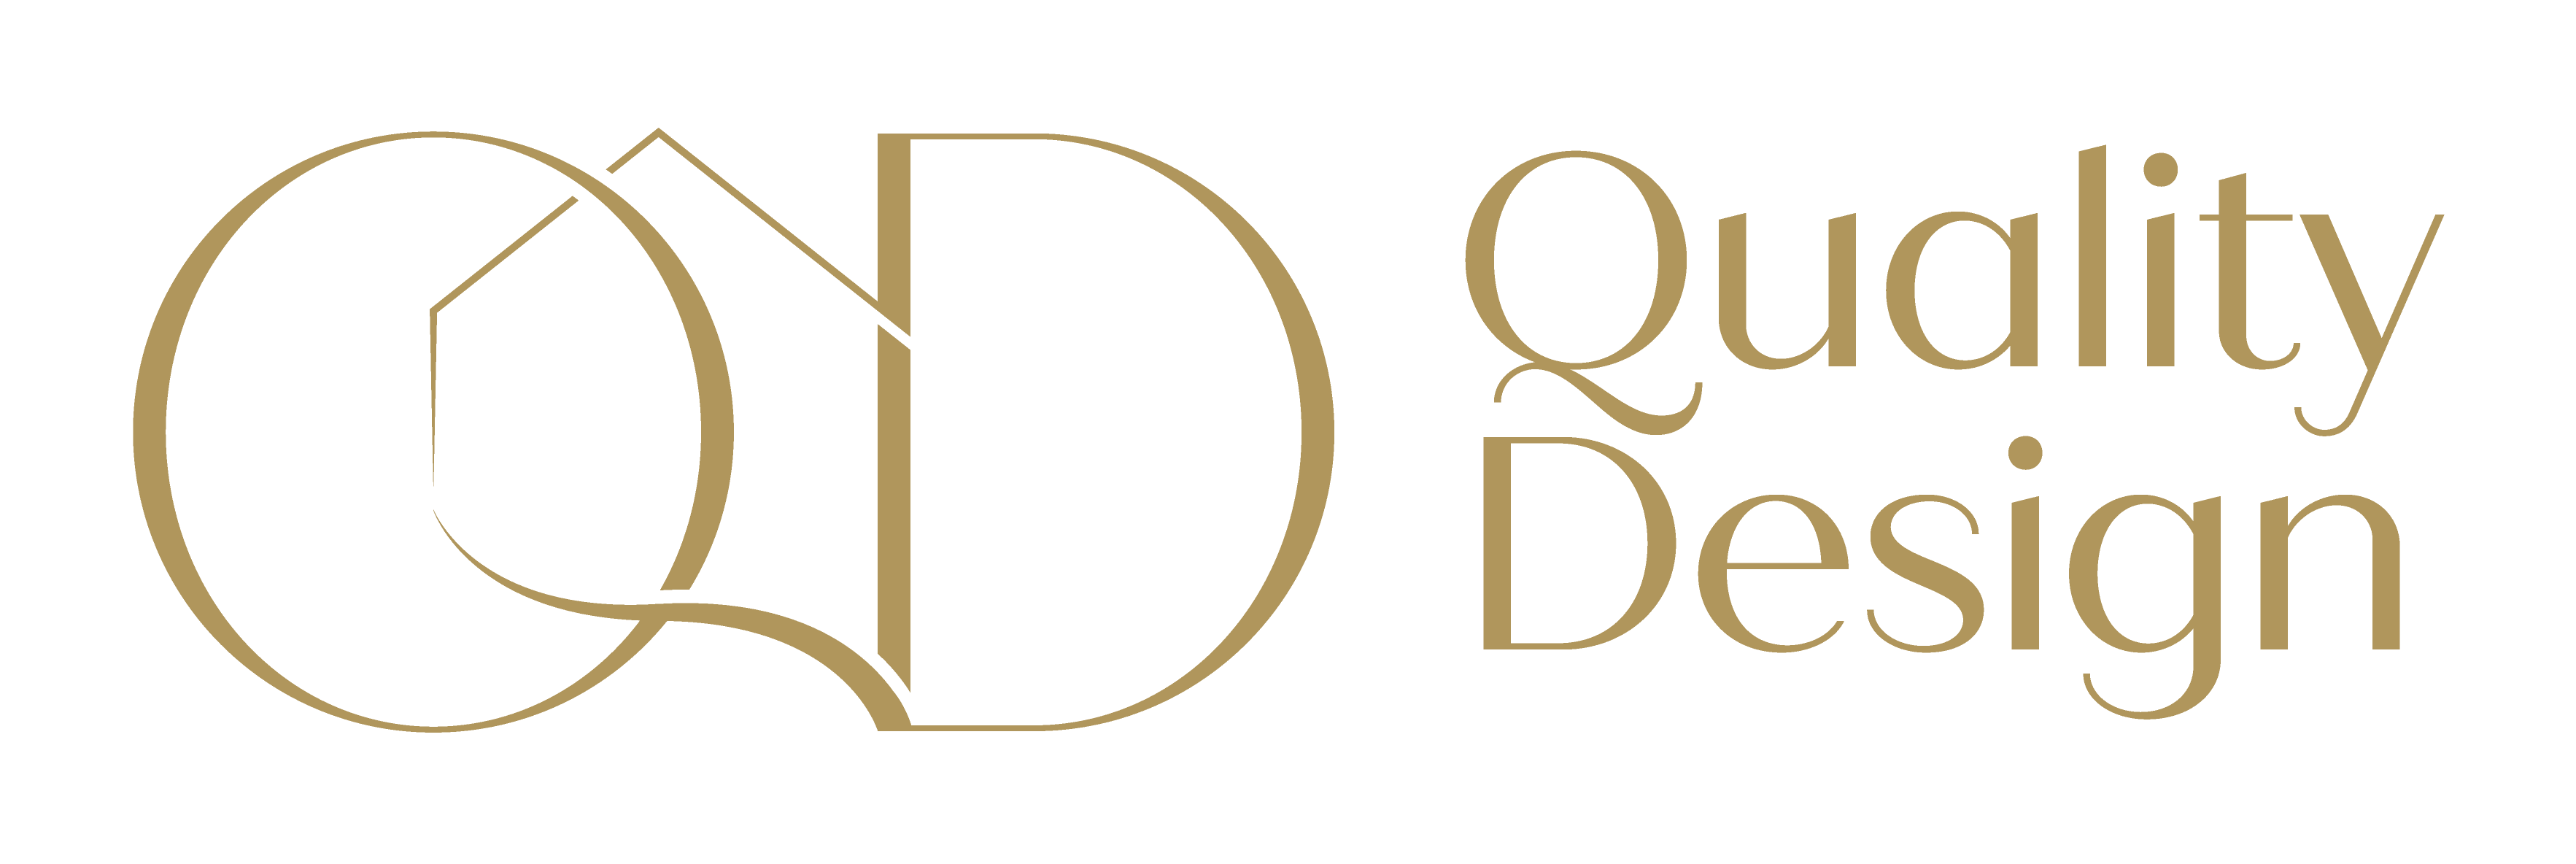 Qdesign logo